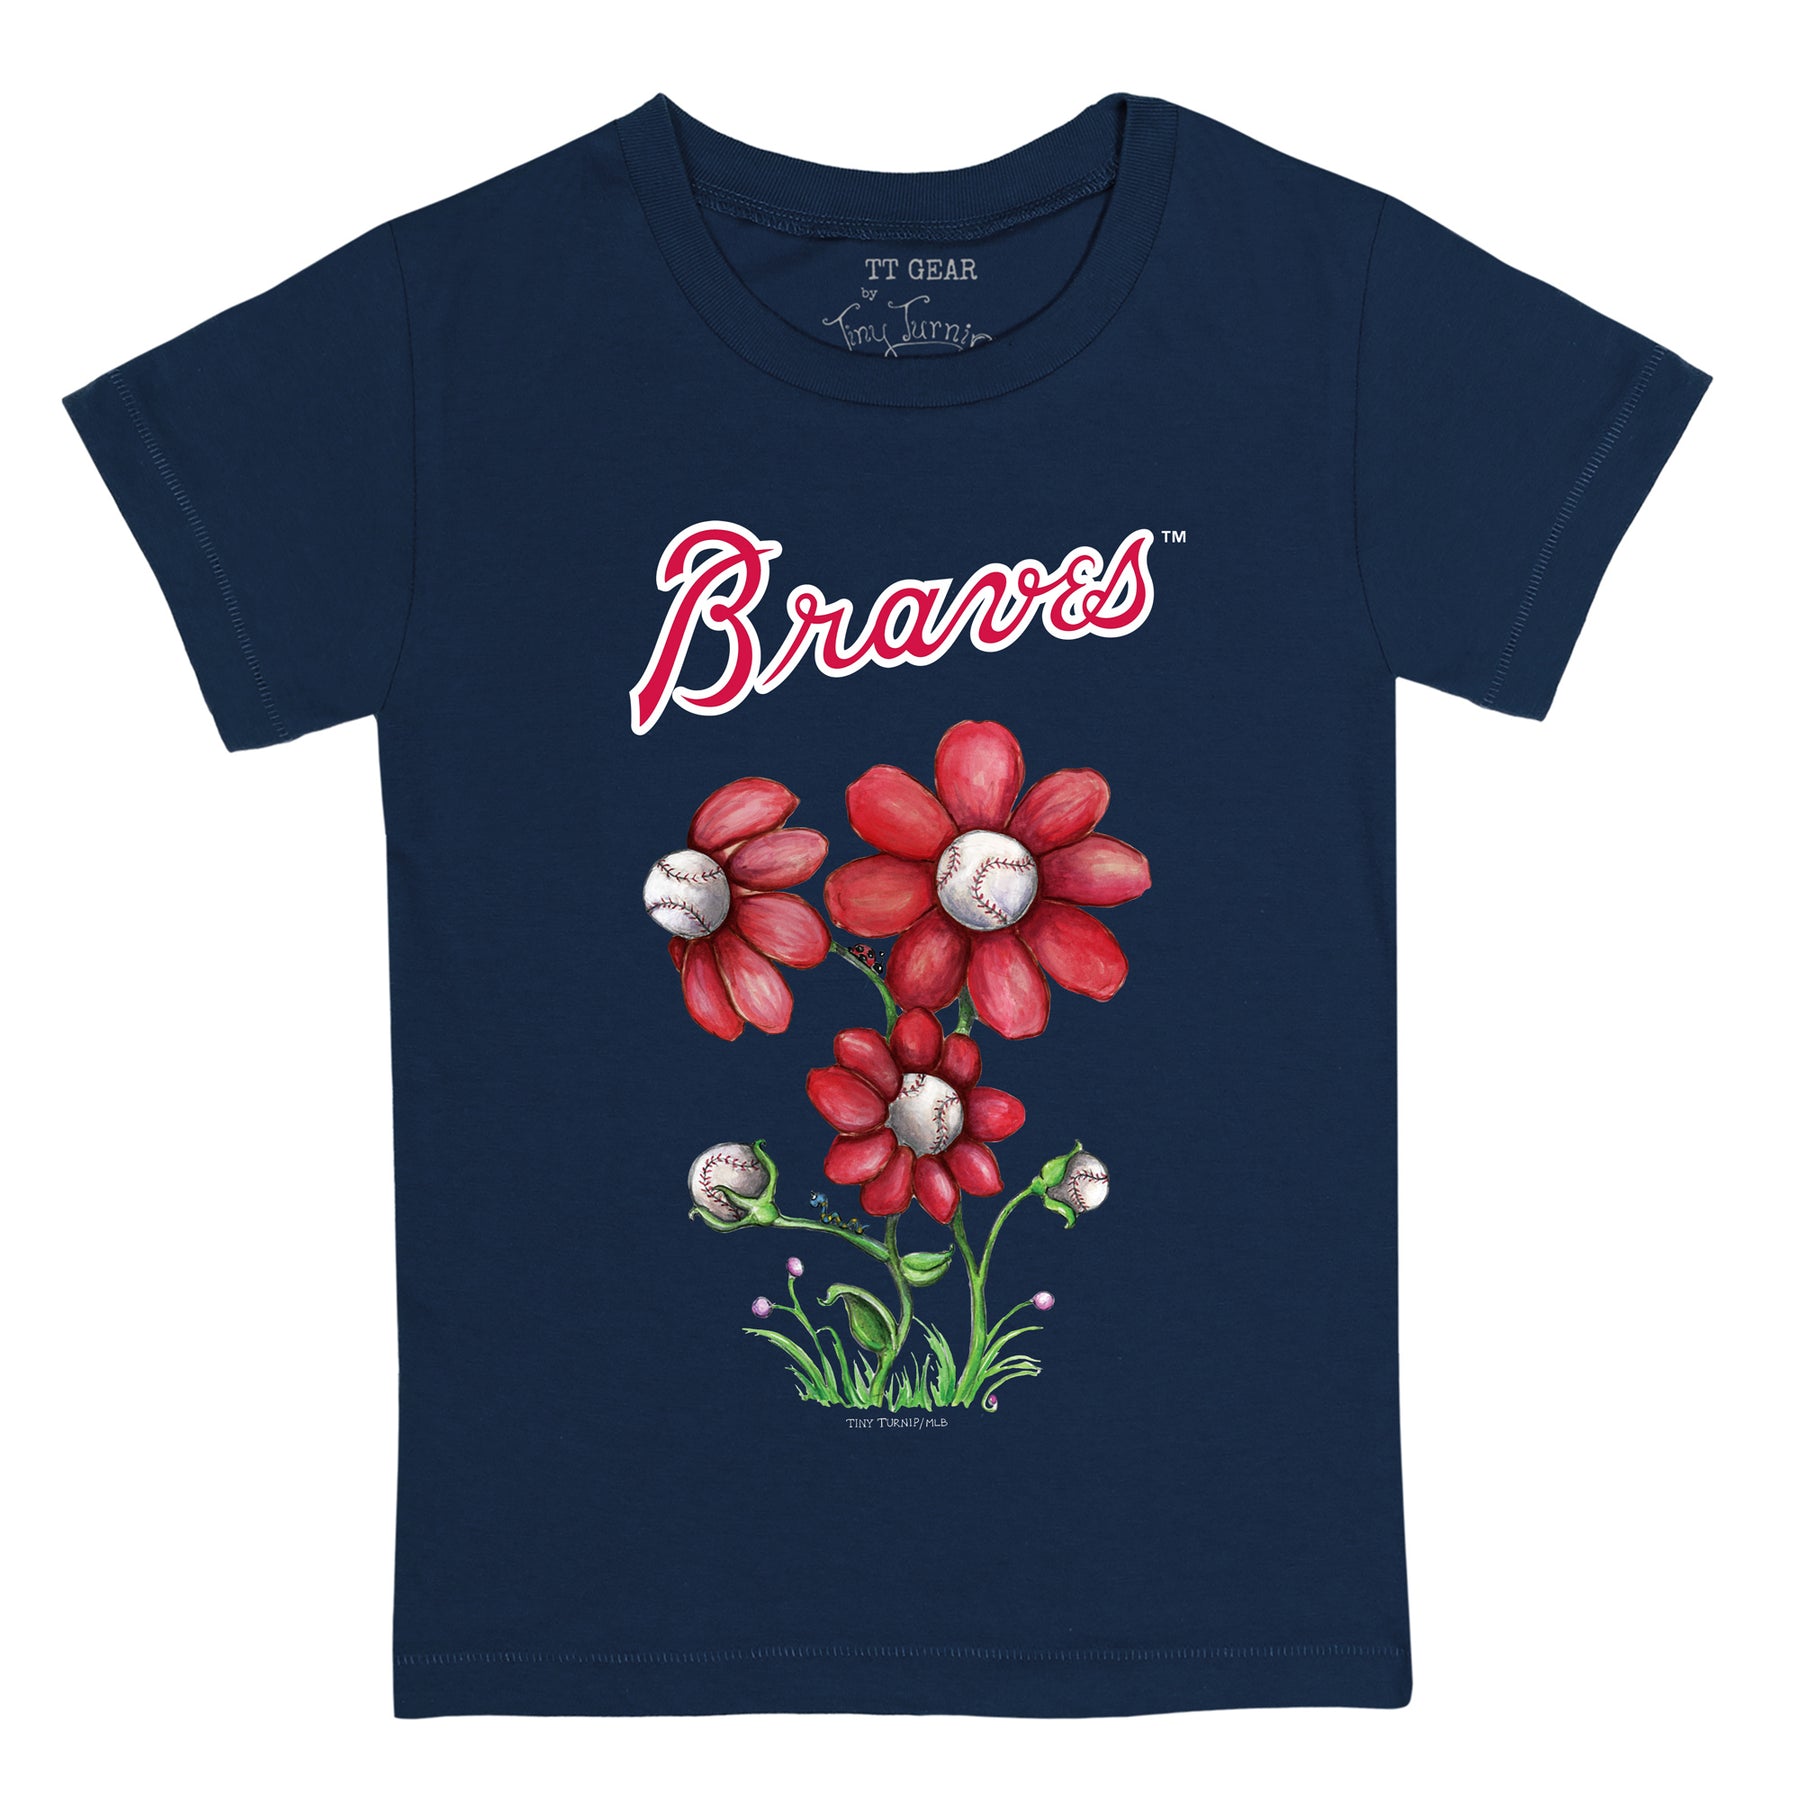 Atlanta Braves Mlb Floral Baseball Jersey Baseball Gifts - Best